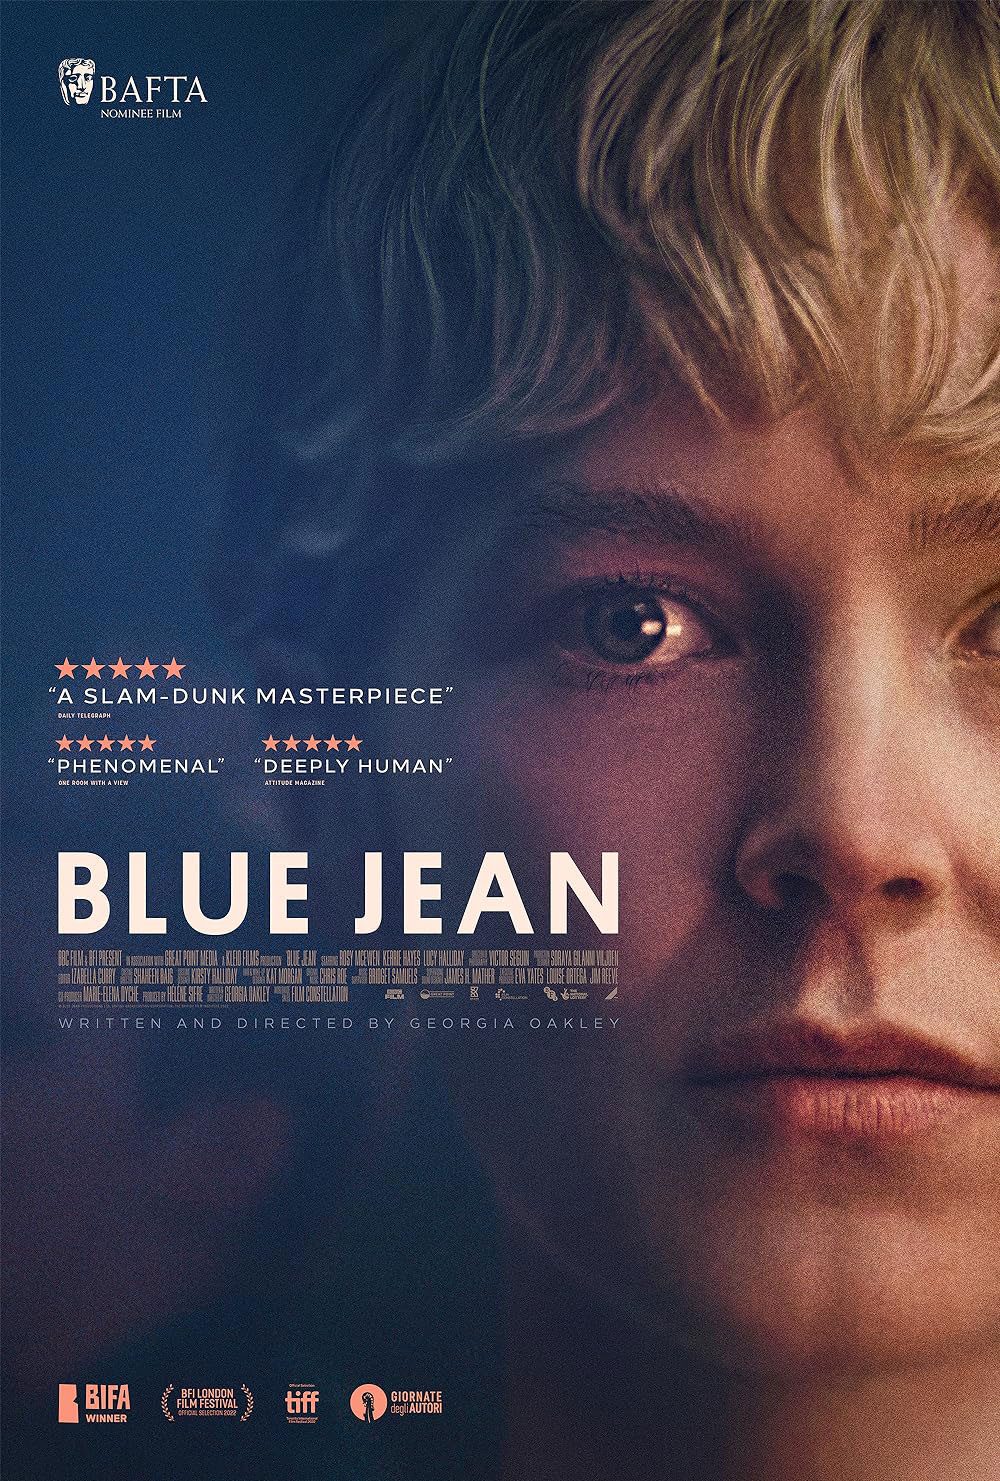 Blue Jean film poster